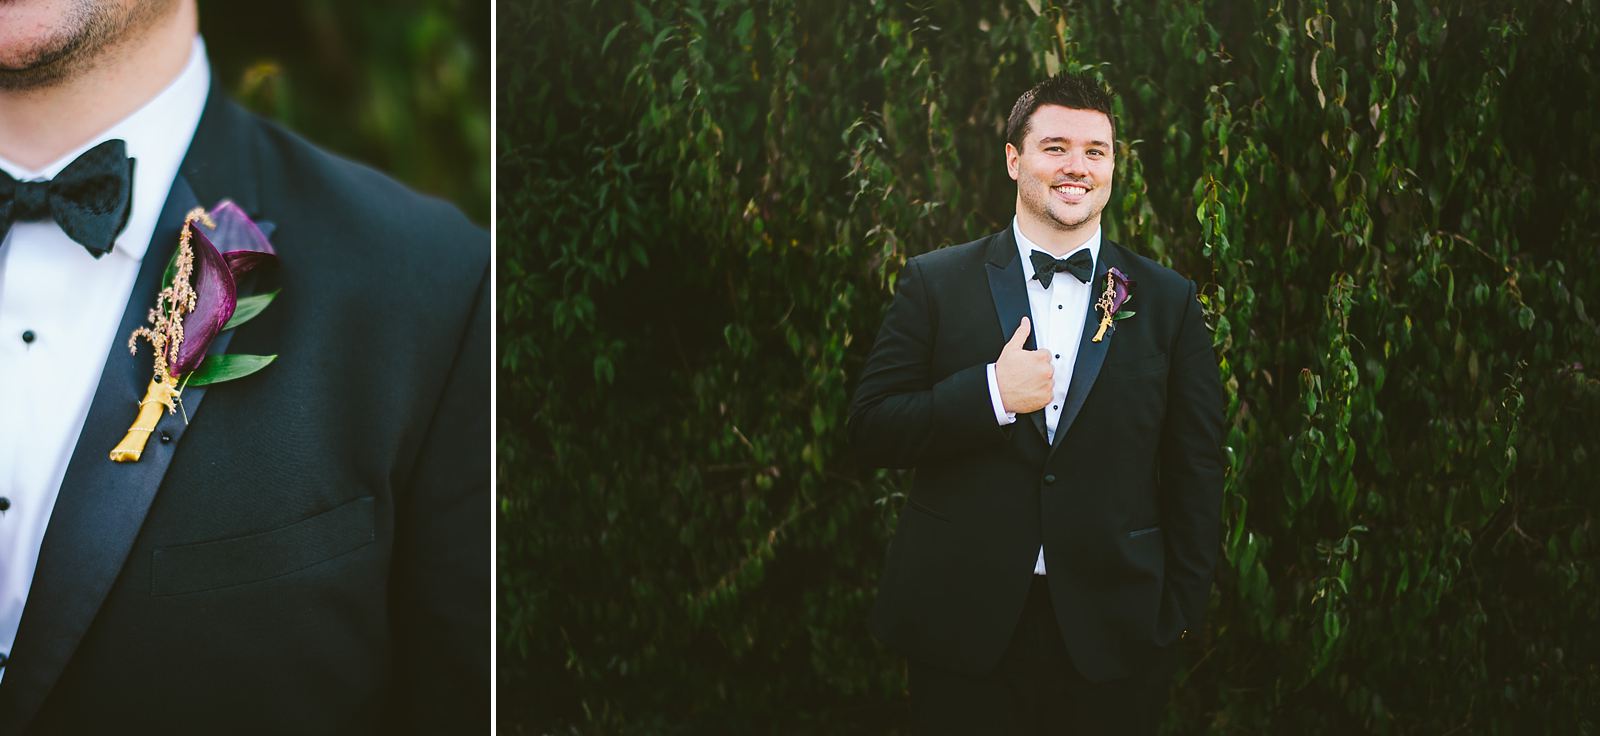 46 groom chicago wedding photos - Chicago Drake Hotel Wedding // Corie + Jordan